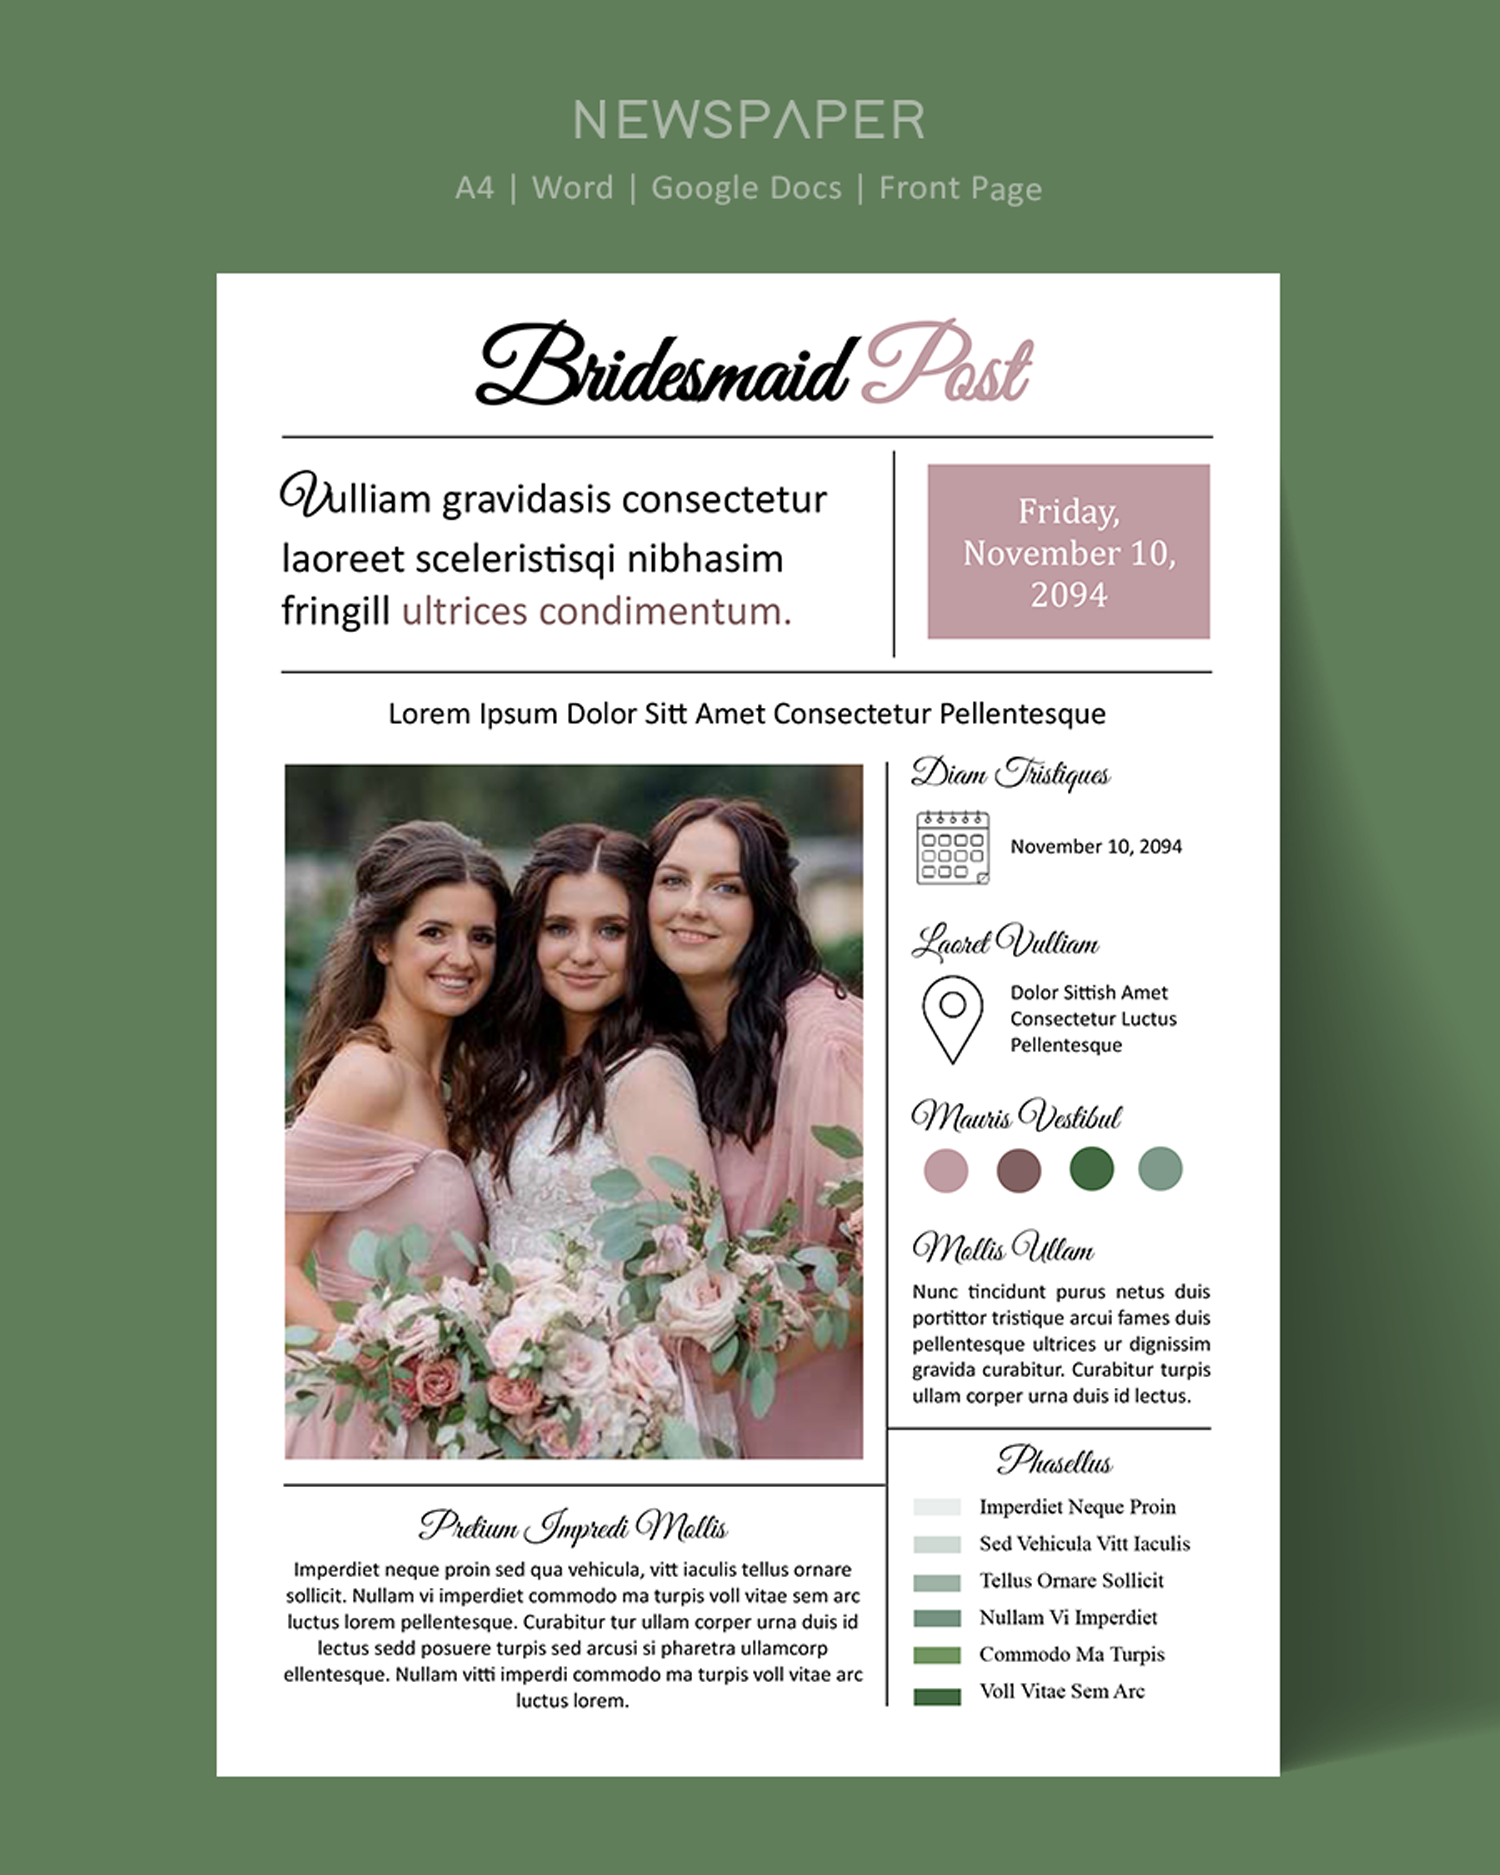 Bridesmaid Proposal Newspaper Card Template